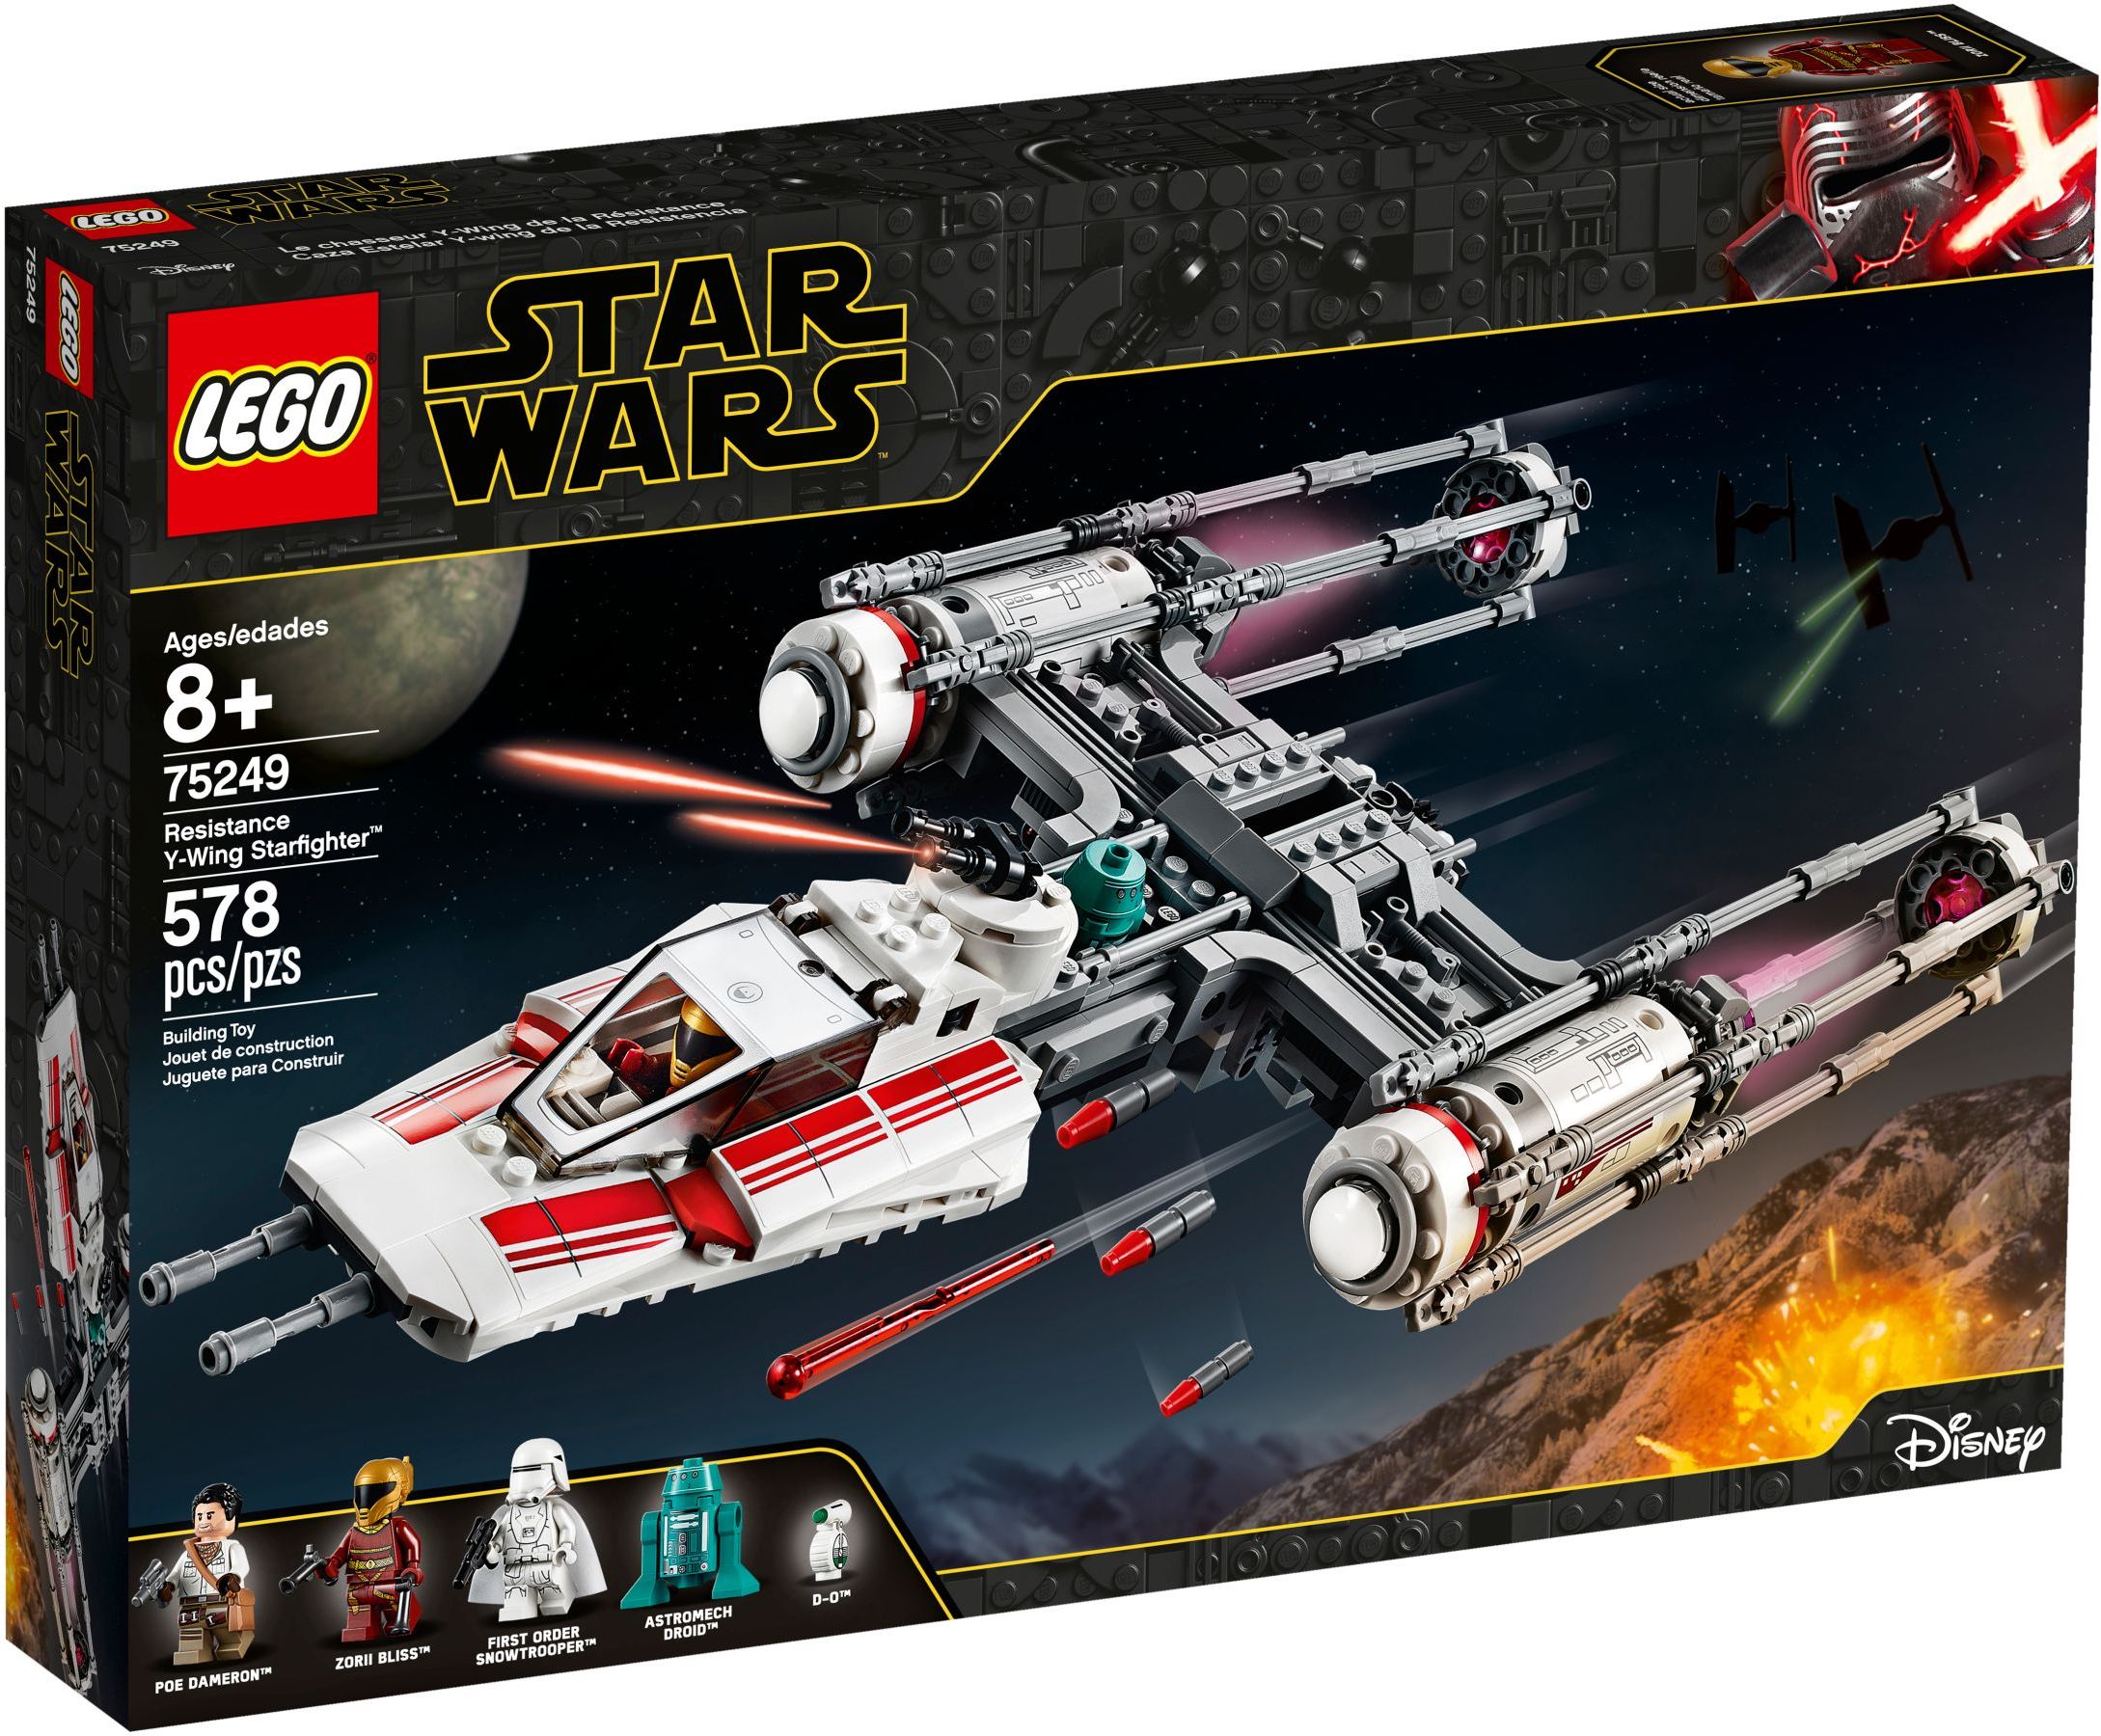 LEGO Star Wars 75249 Resistance Y-wing Starfighter